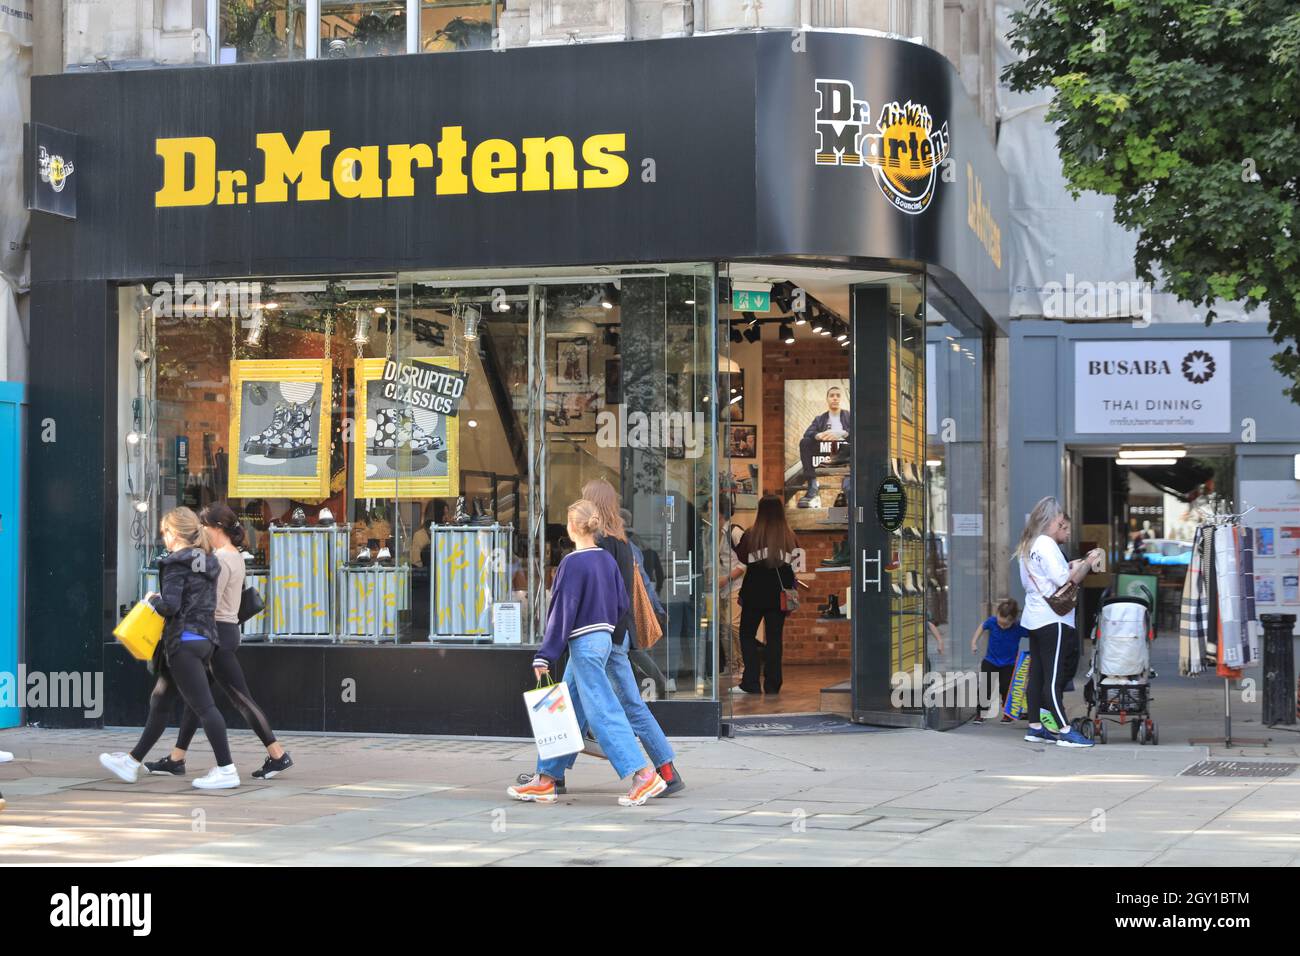 Dr. Martens British shoe shop exterior, people walking past footwear retailer on Oxford Street, London, England Stock Photo